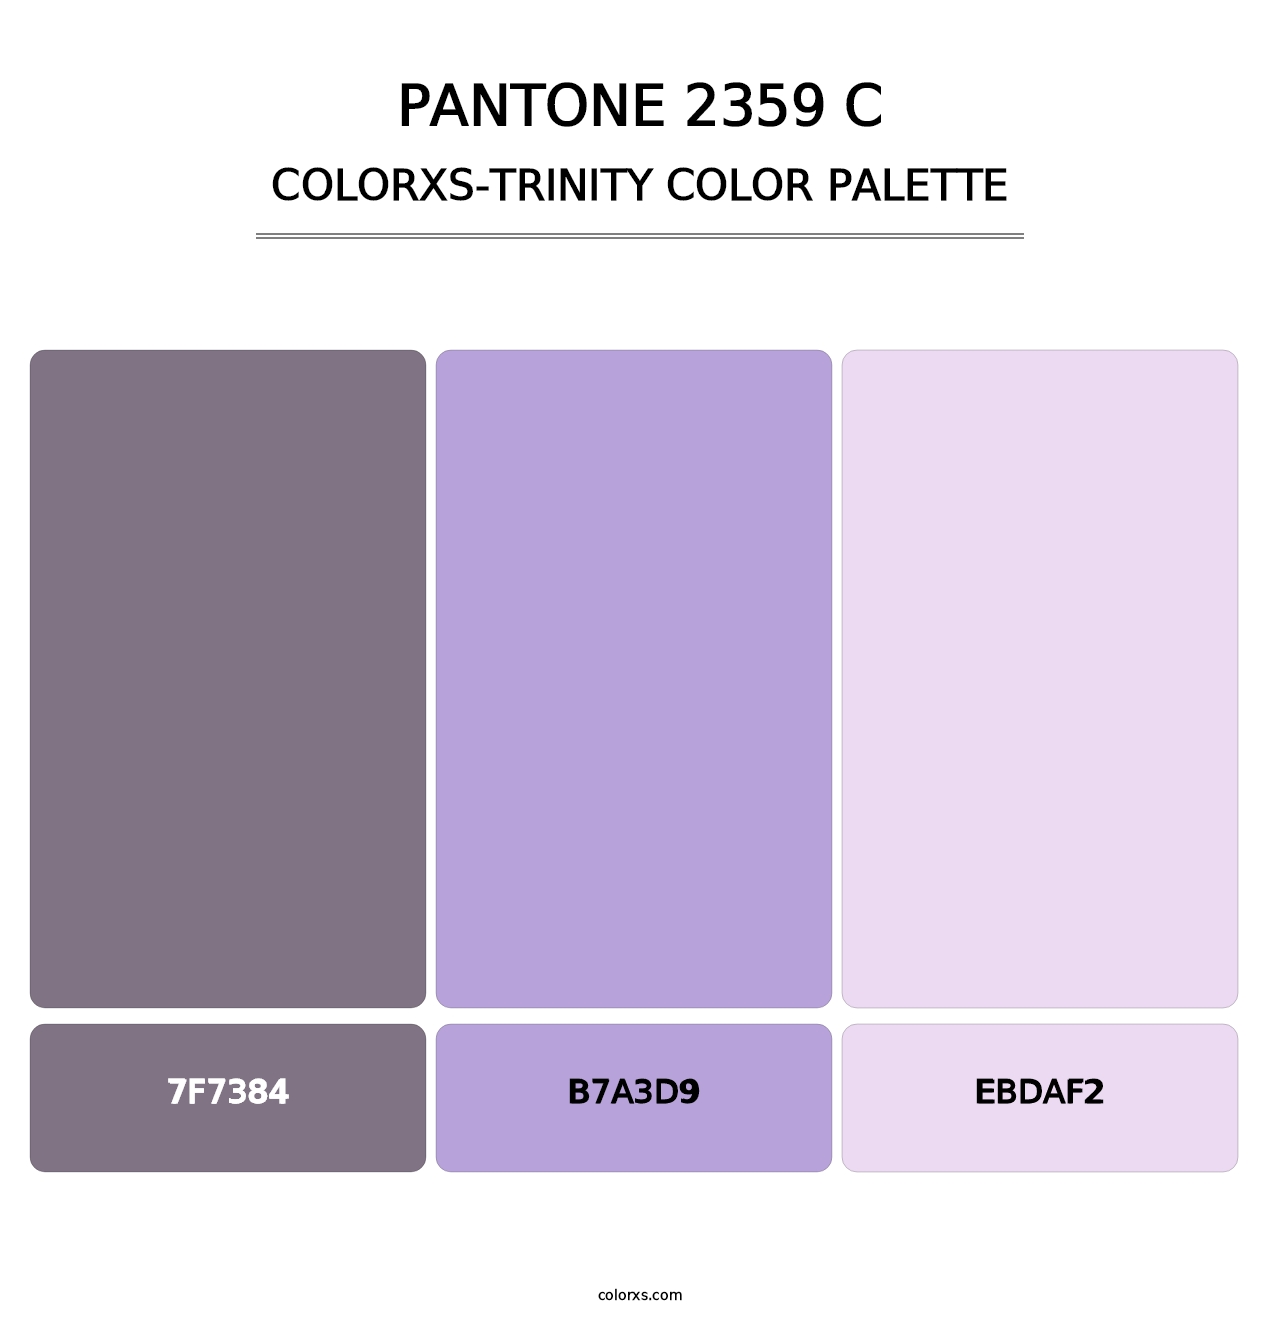 PANTONE 2359 C - Colorxs Trinity Palette